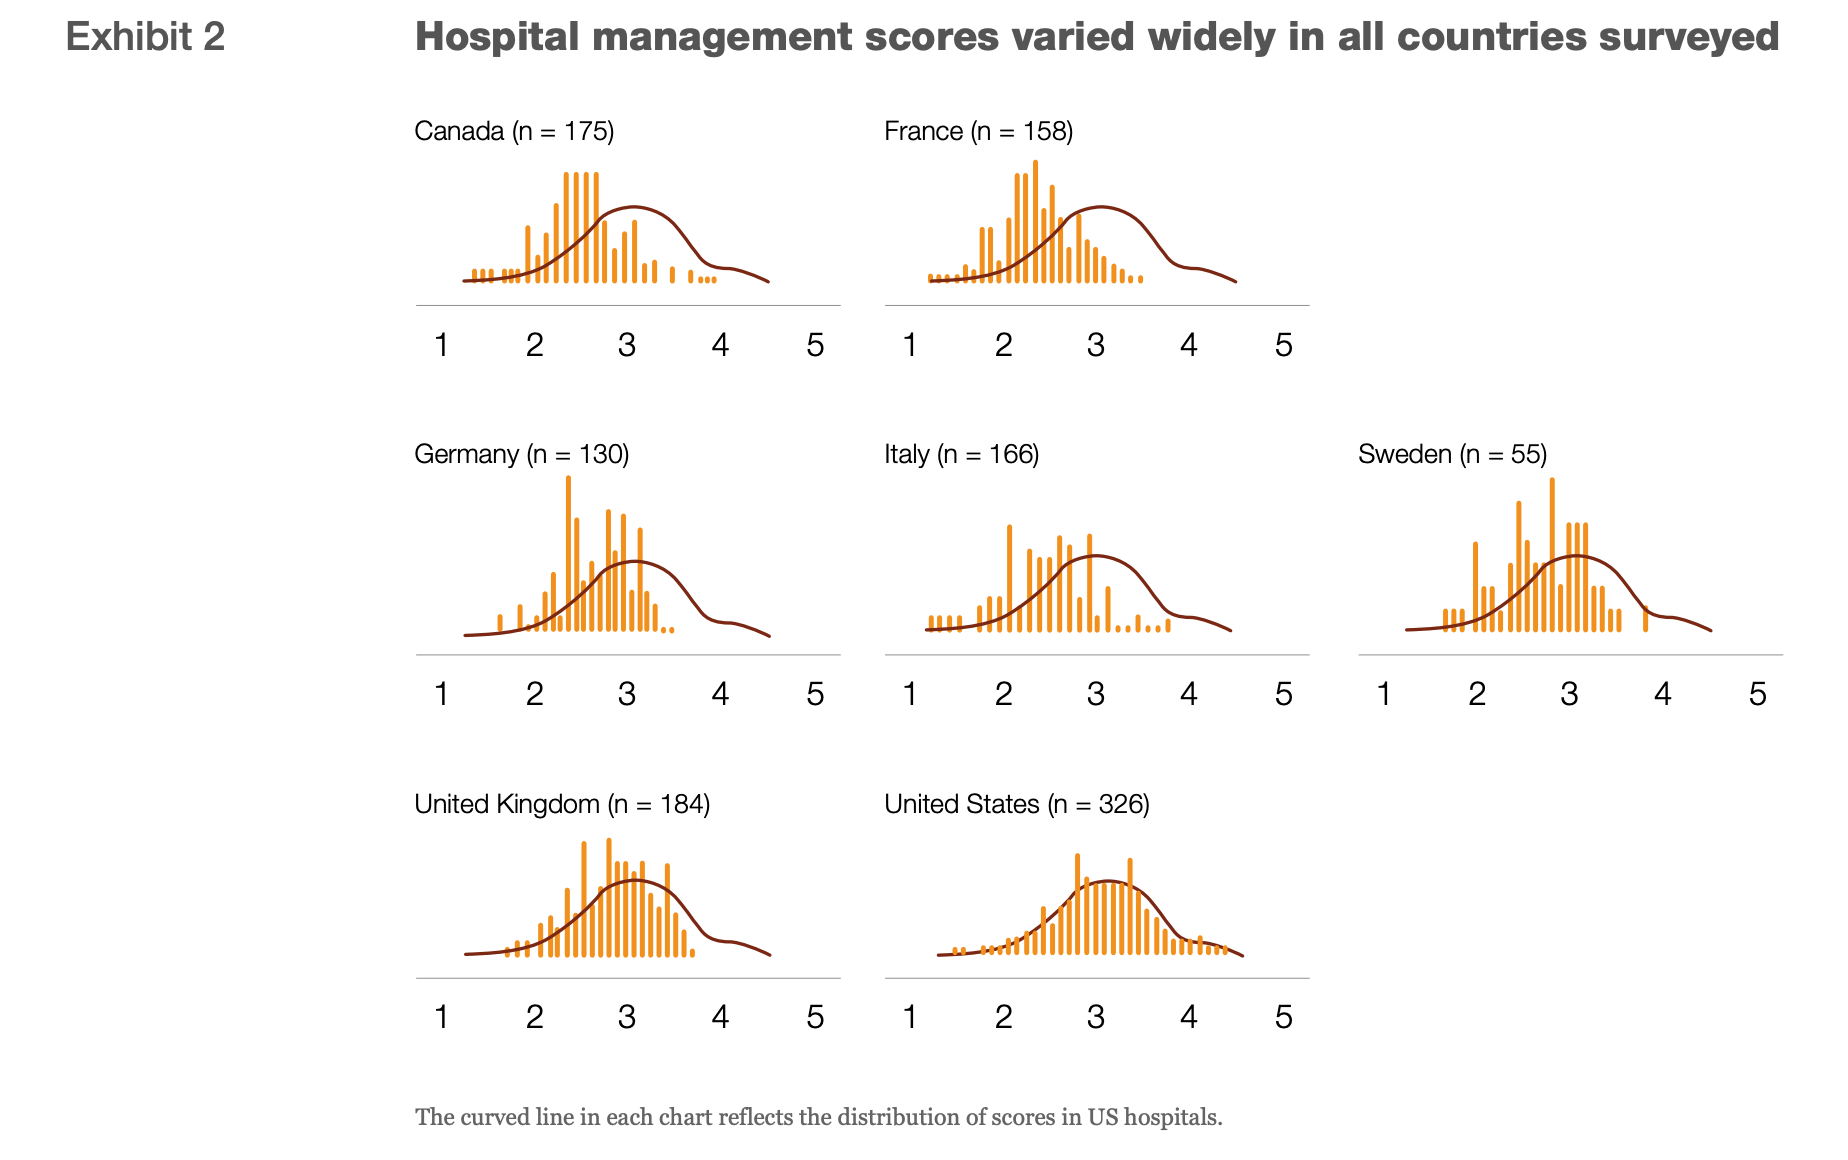 HMS scores vary across countries